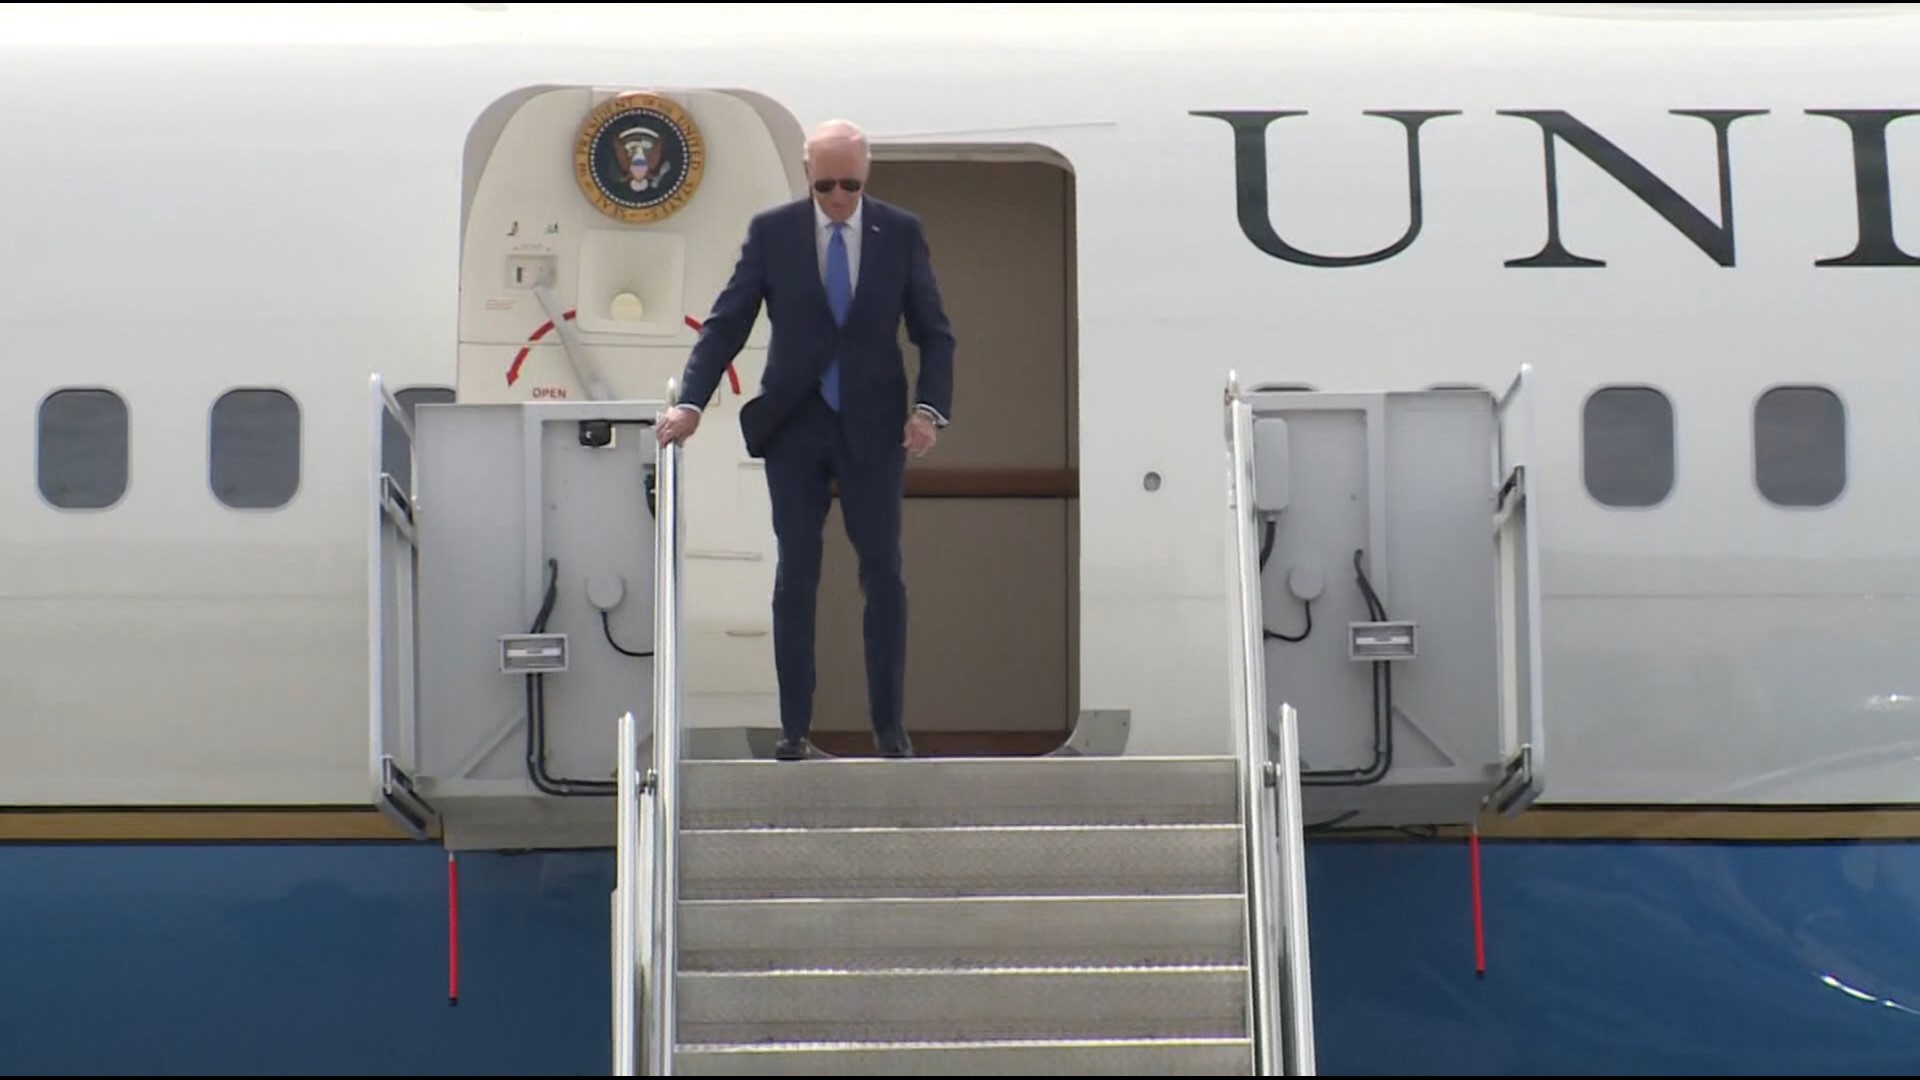 President Biden lands at MSP Airport